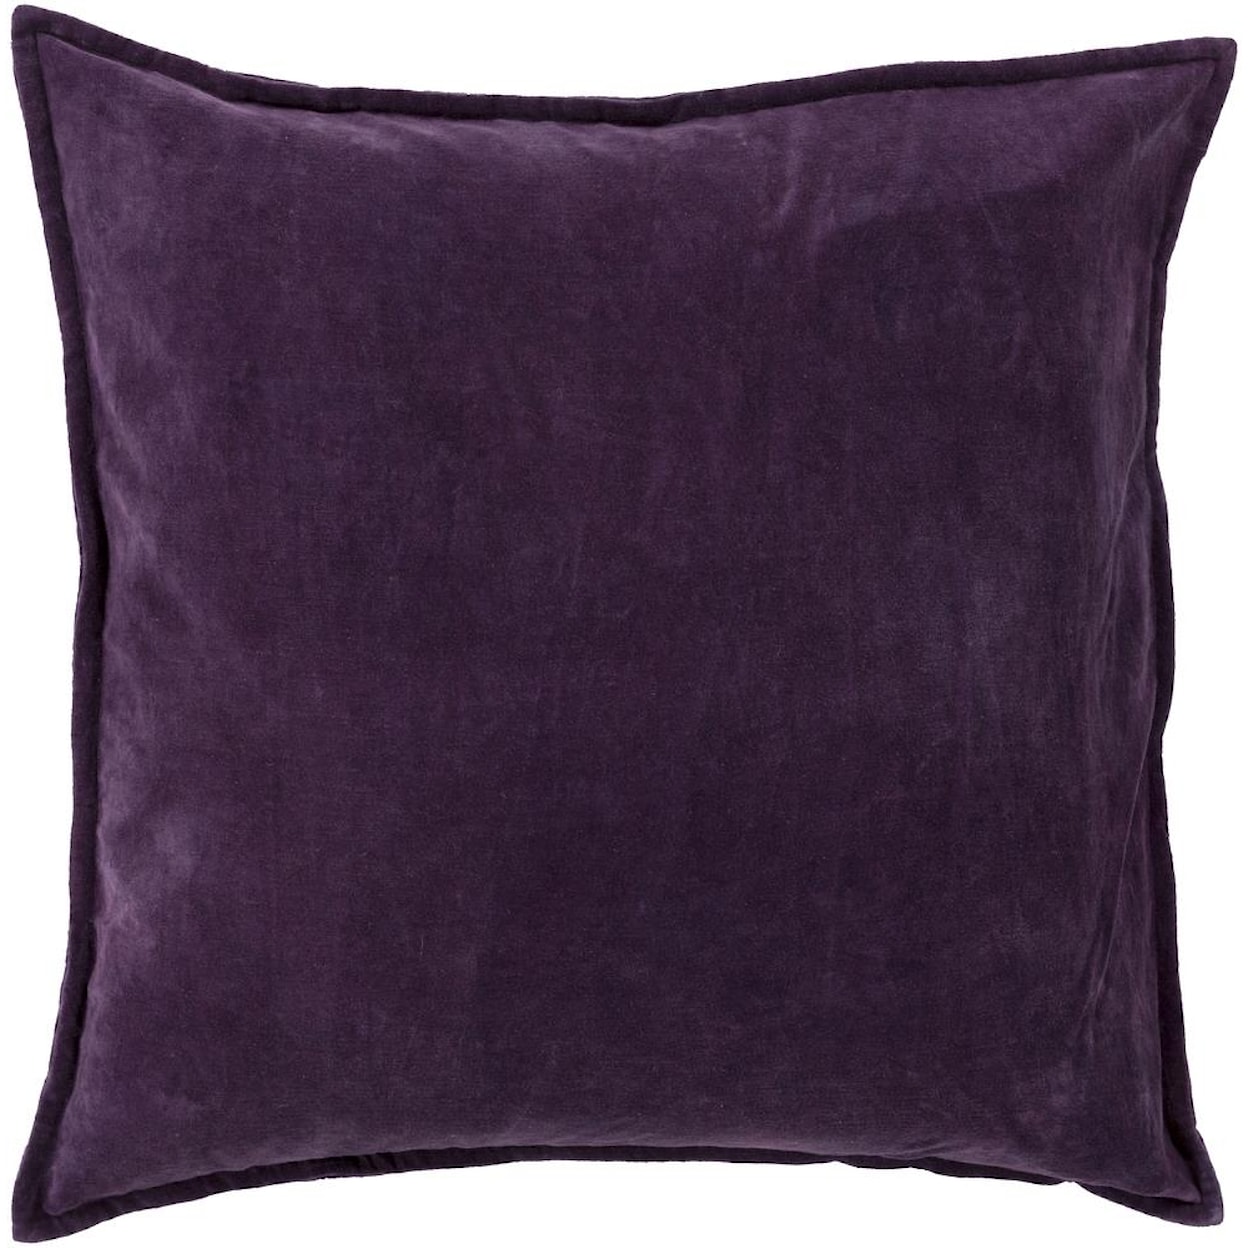 Surya Pillows 22" x 22" Cotton Velvet Pillow